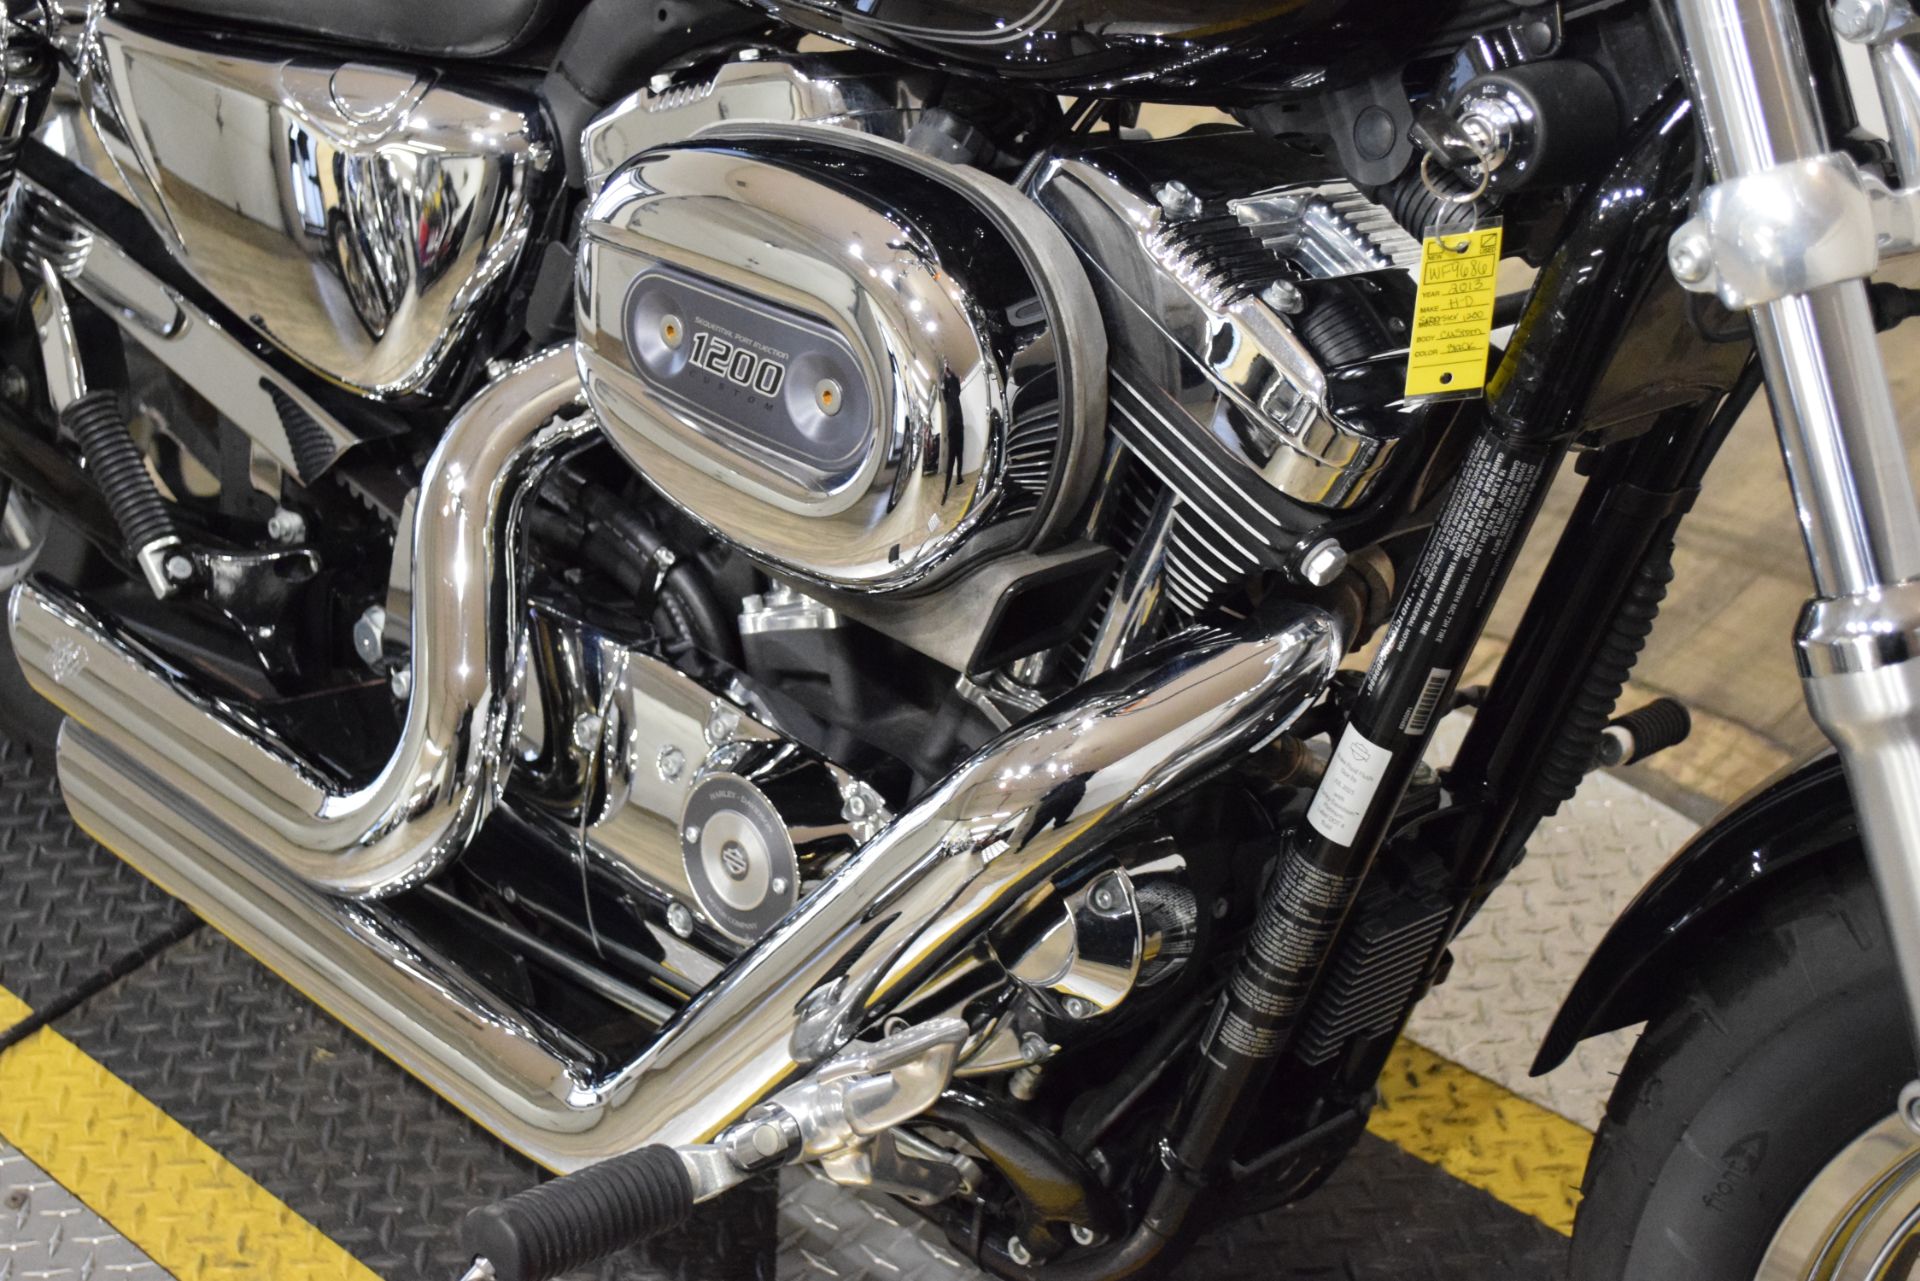 2013 Harley-Davidson Sportster® 1200 Custom in Wauconda, Illinois - Photo 4